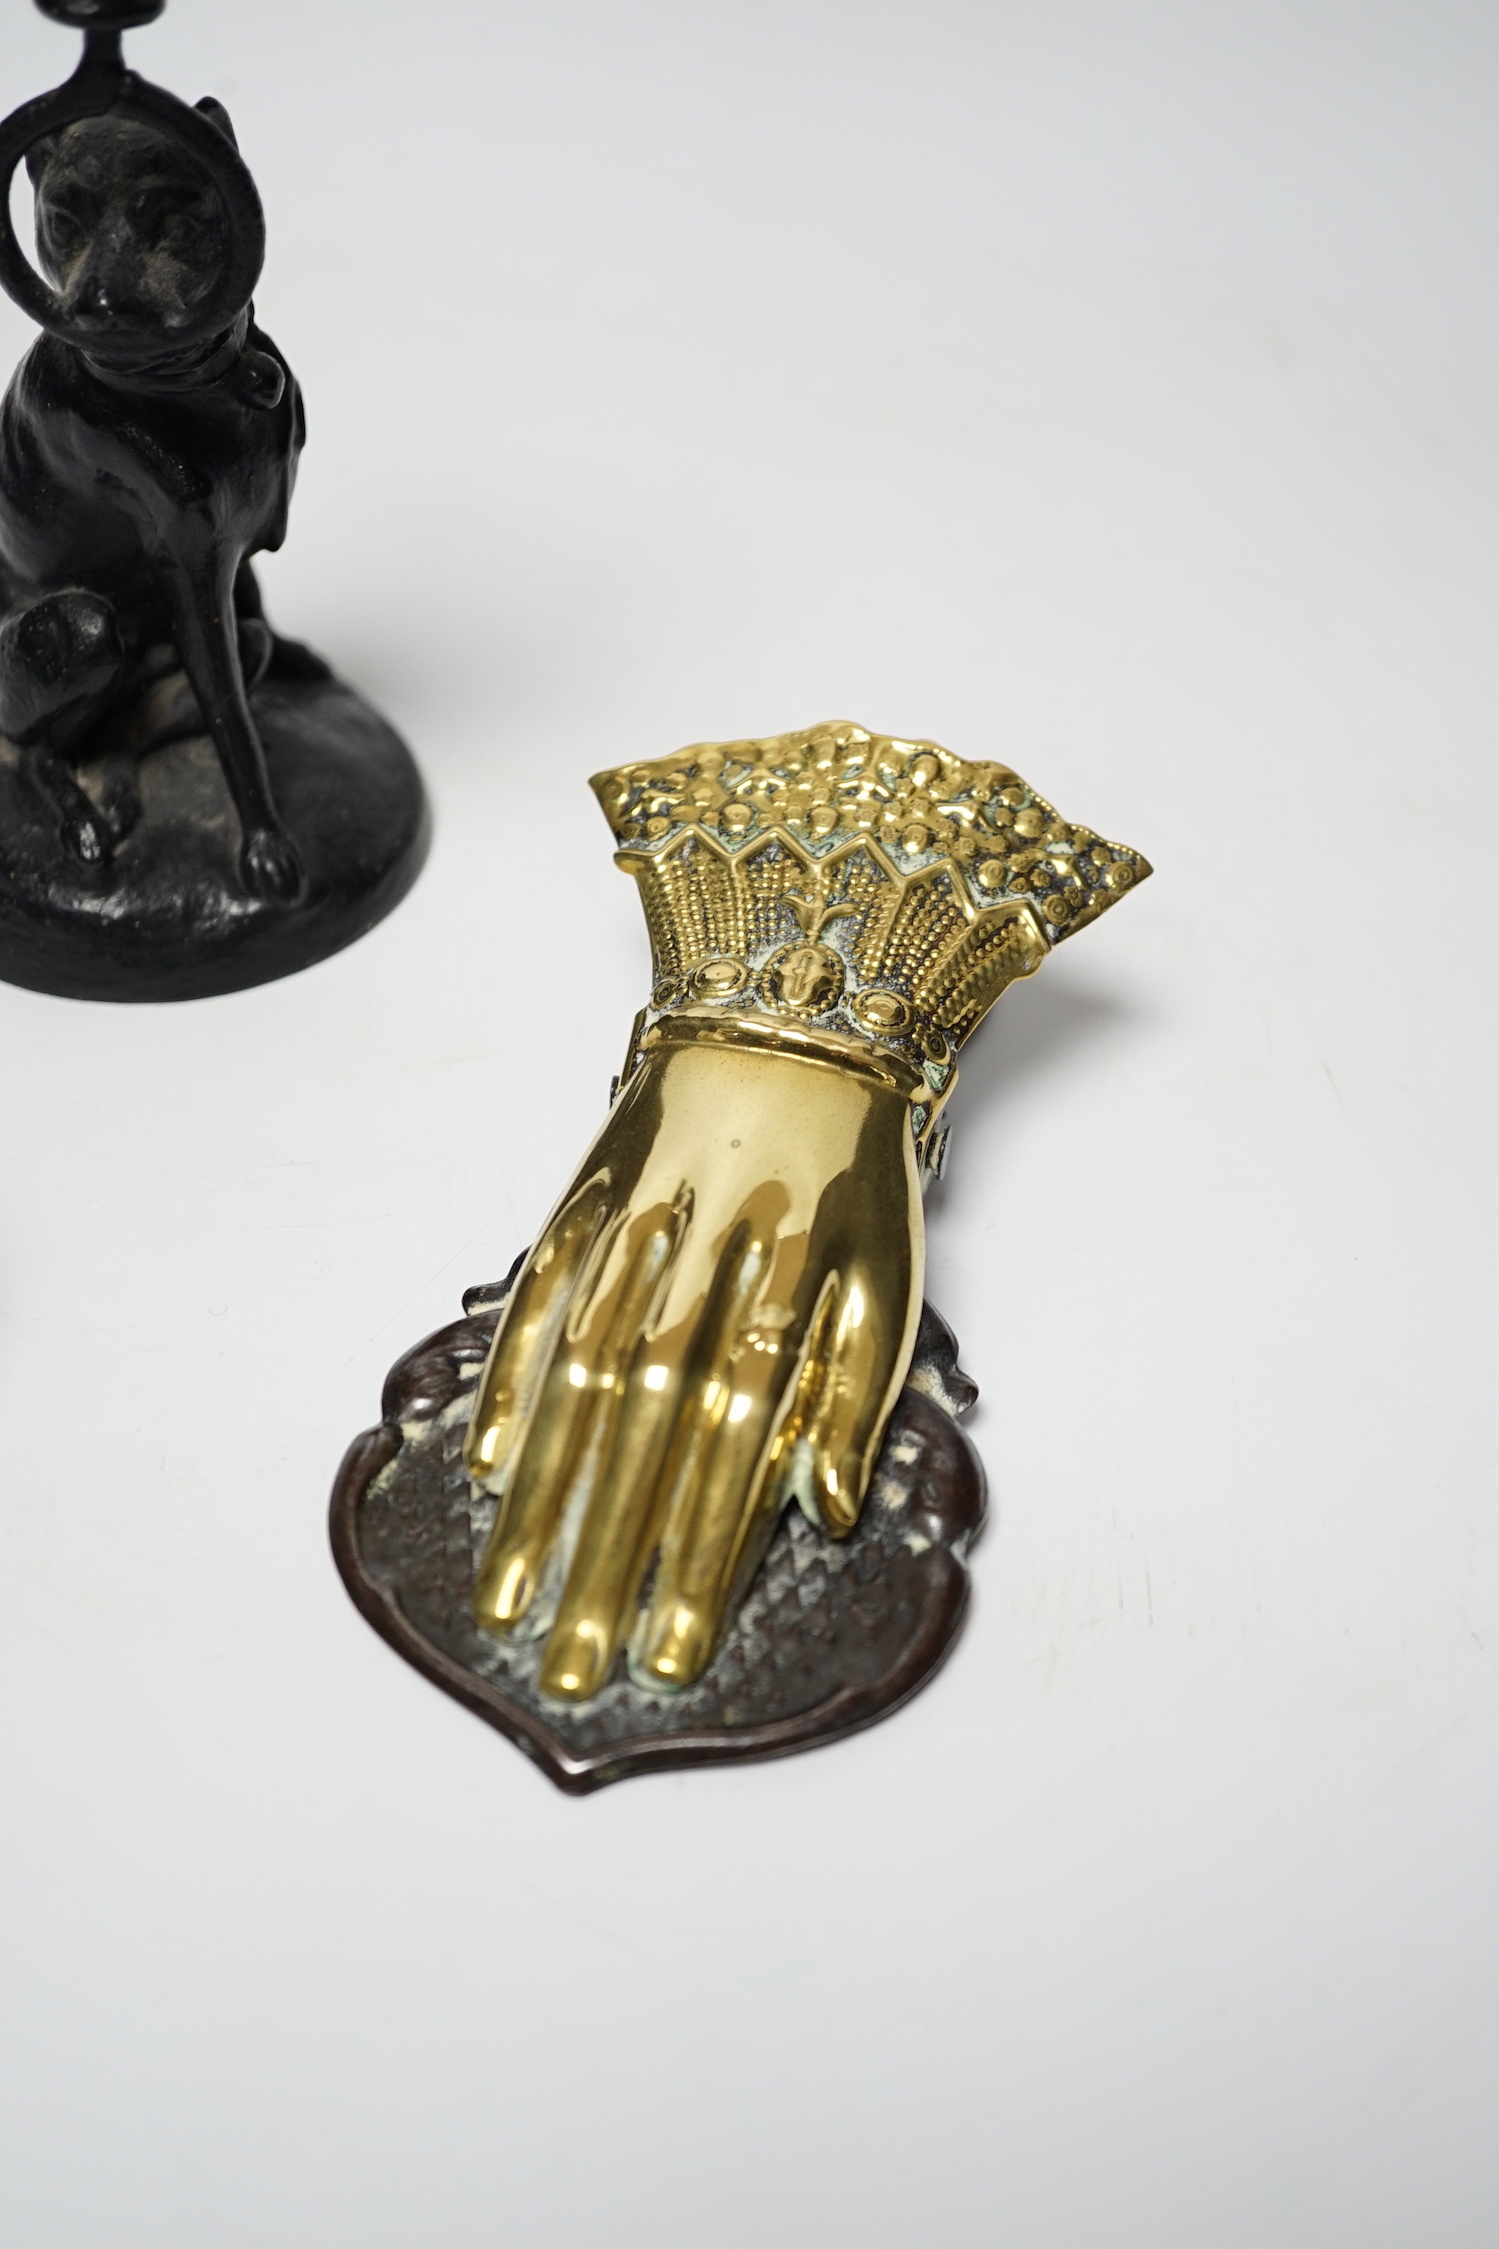 A Victorian brass hand paper clip, a small bronze tribal head and novelty dog candlestick, tallest 15cm high